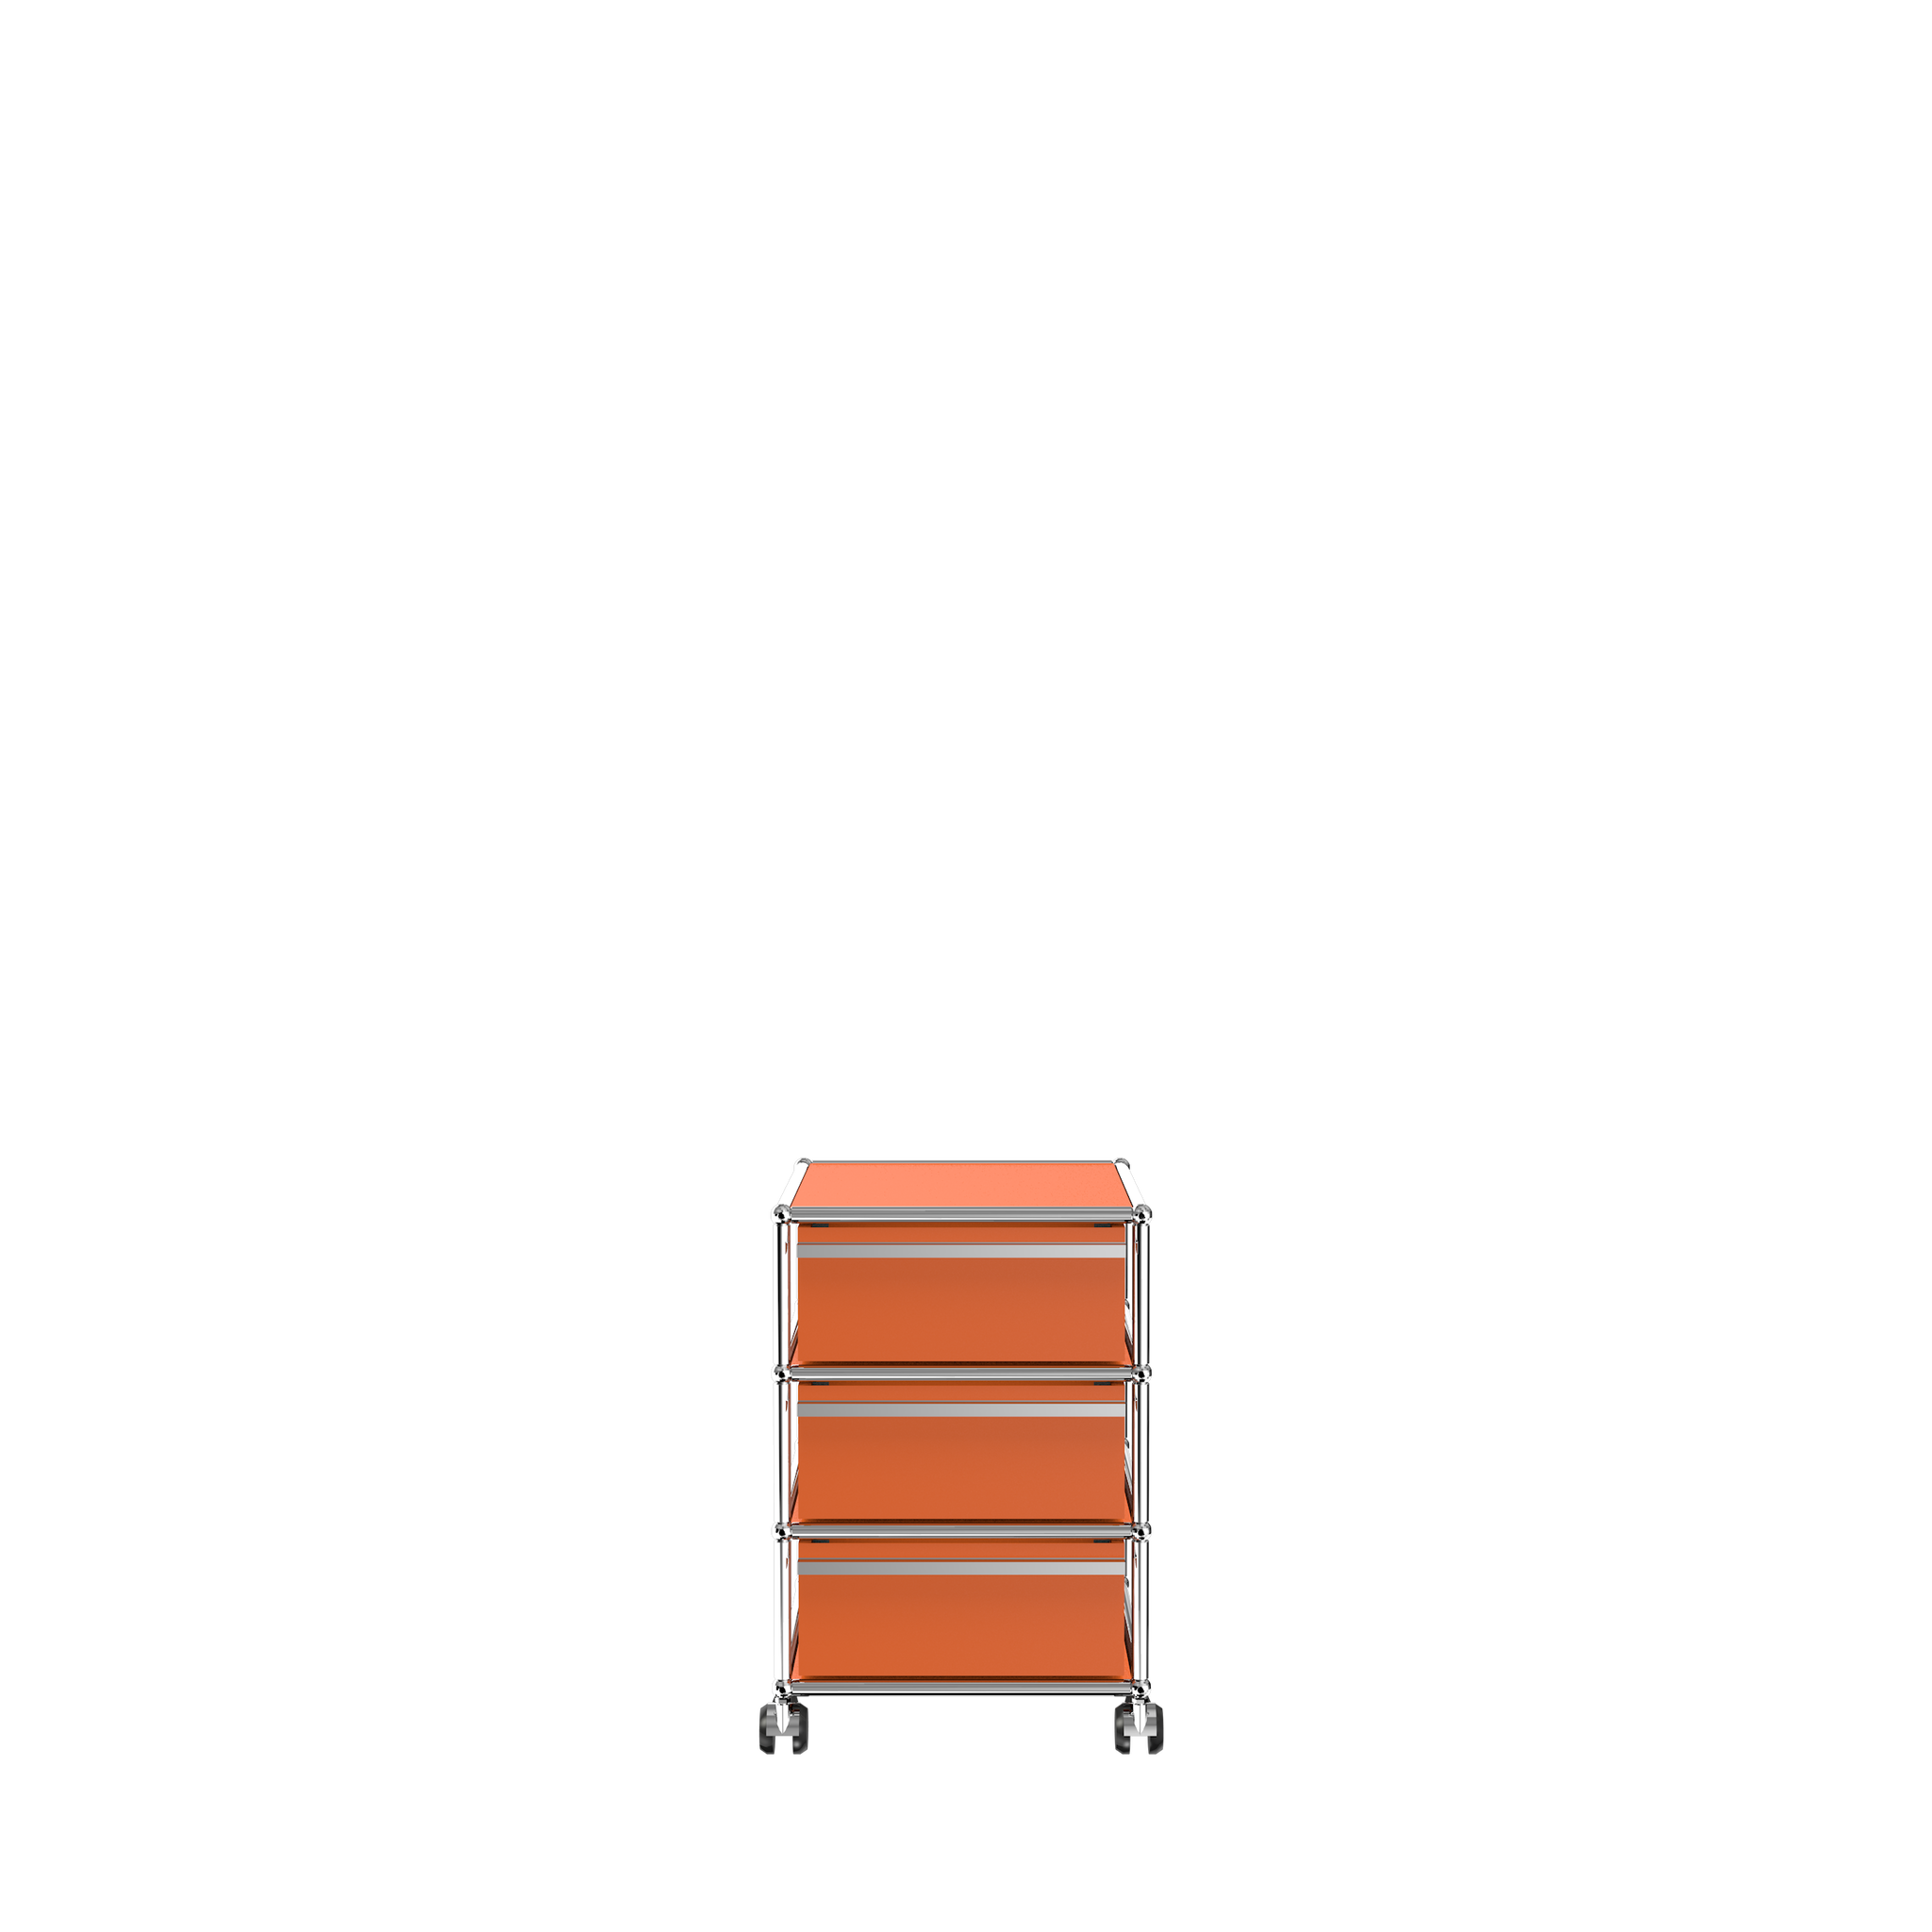 USM Modular Storage Pedestal with Drawers (V) in Pure Orange